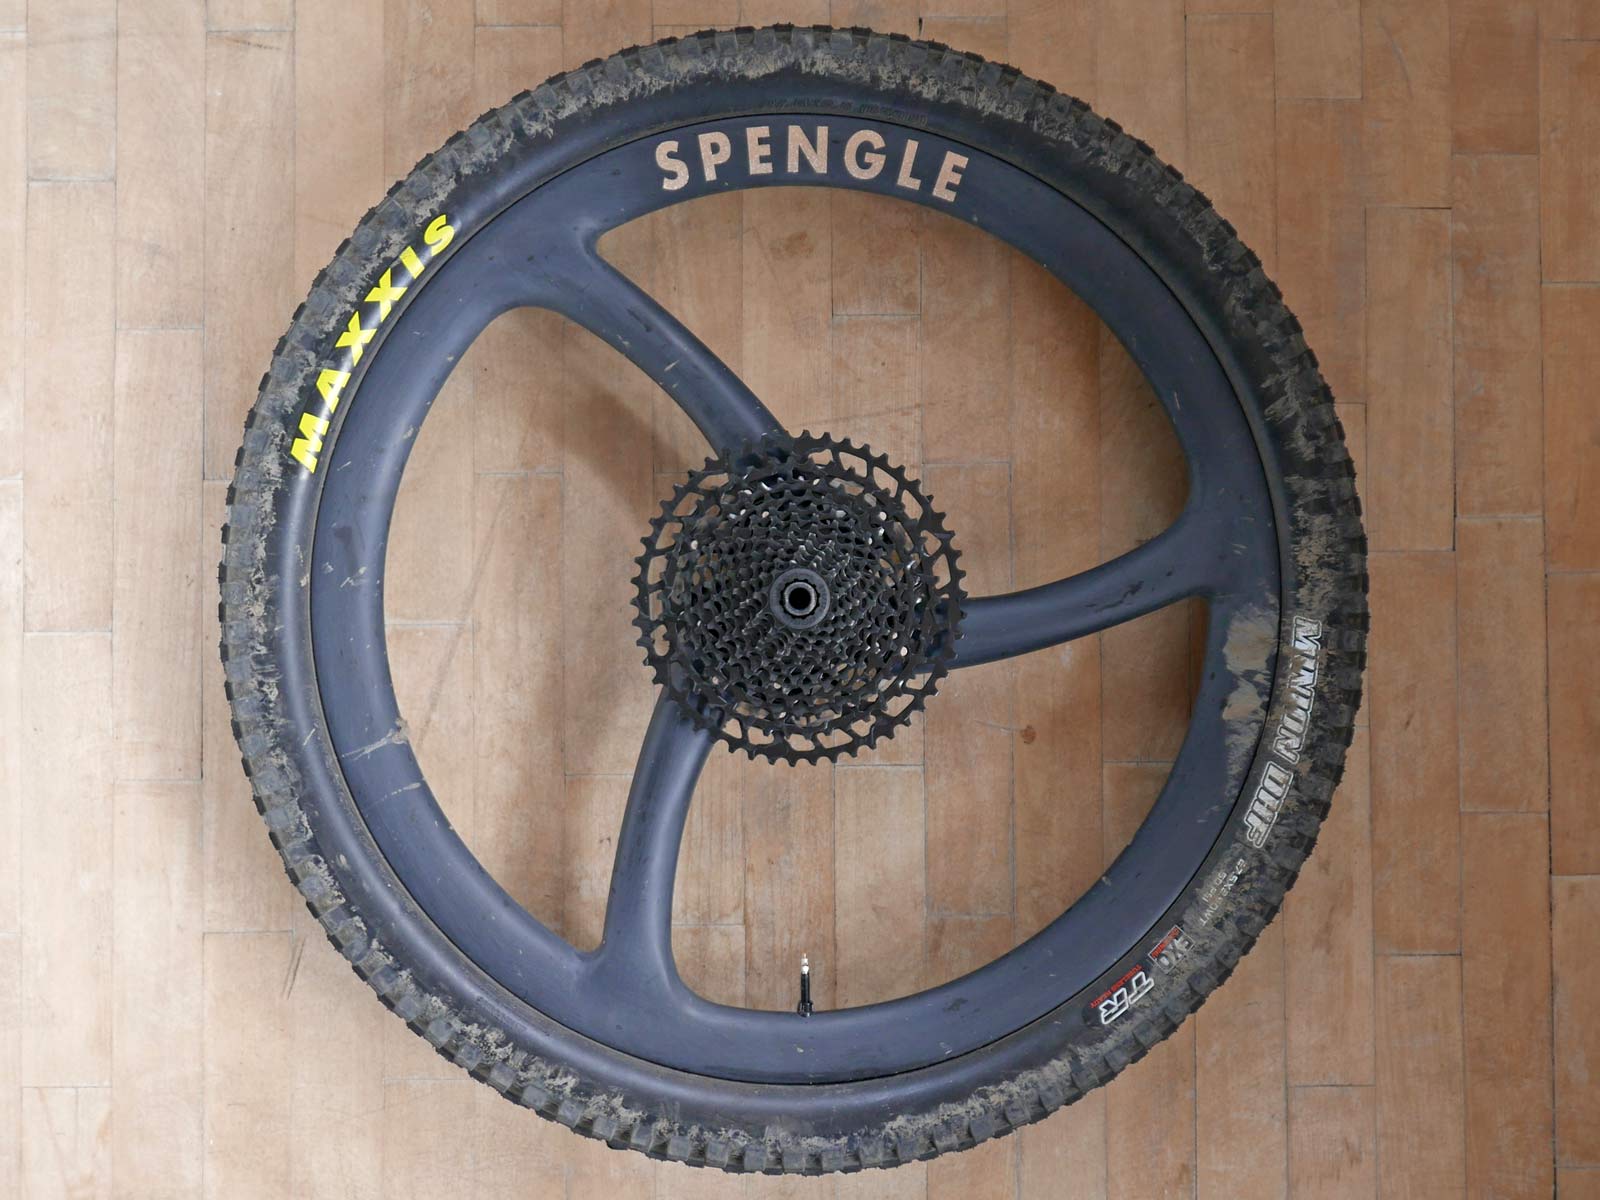 Spengle Carbon next gen, v2.0, v 1.4 tri-spoke enduro all-mountain bike carbon wheels